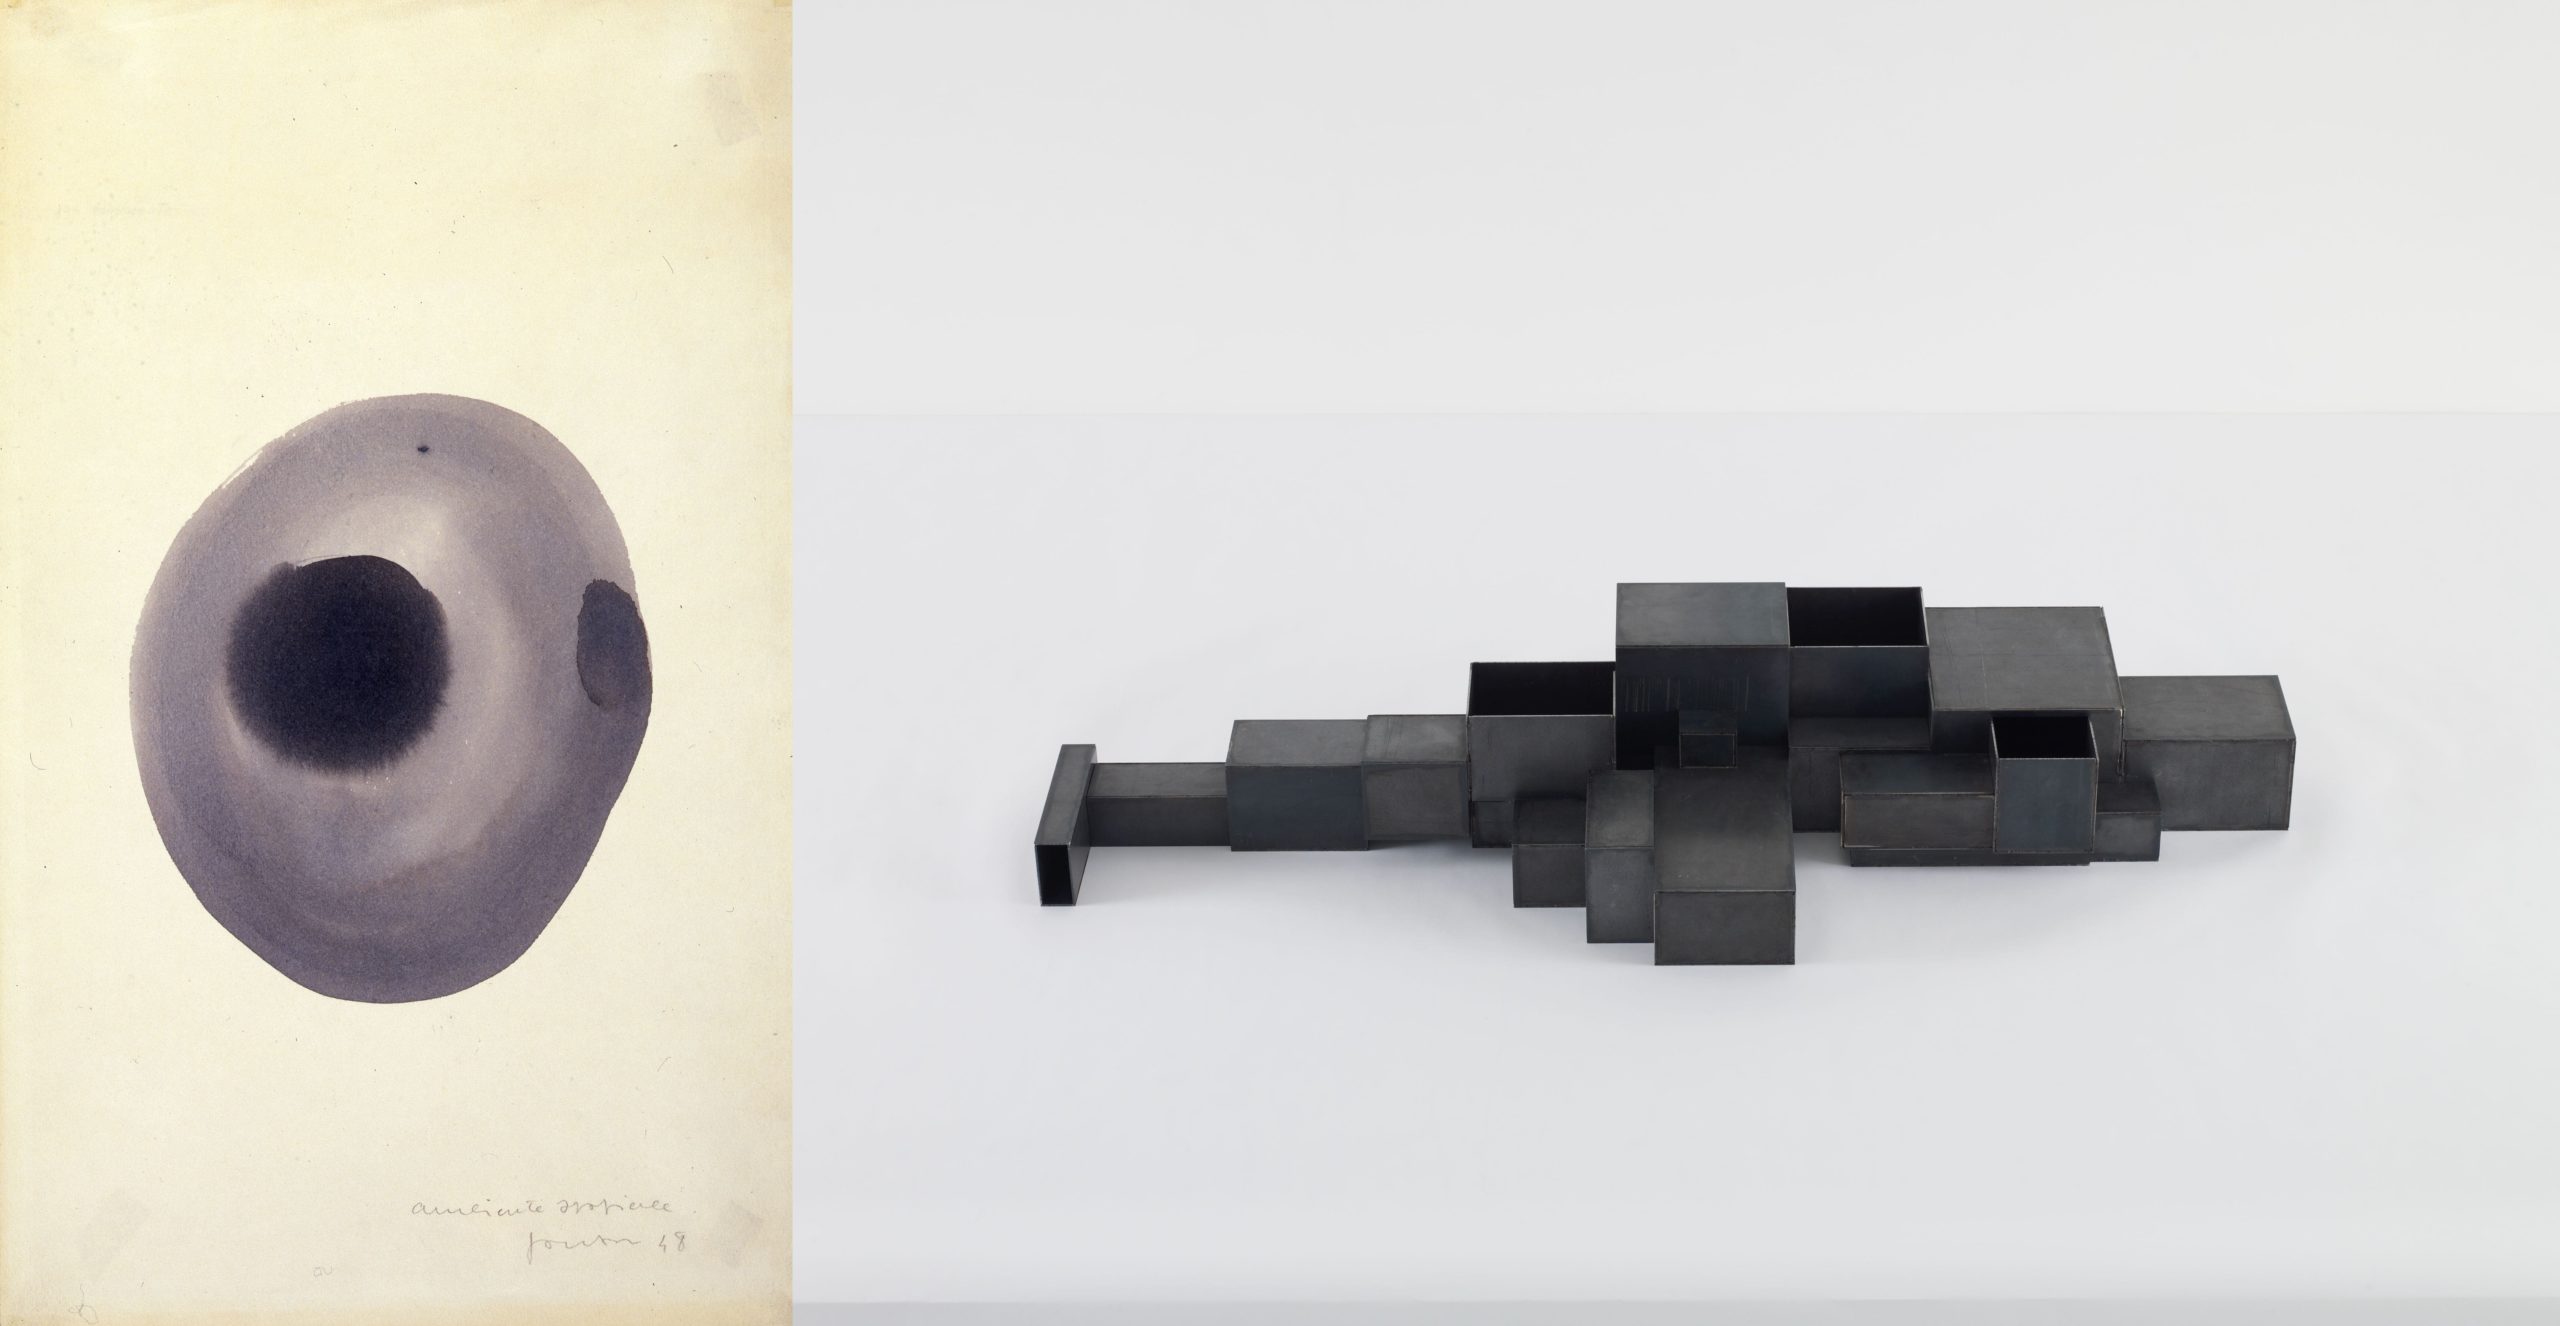 Left: Lucio Fontana, "Ambiente Spaziale,” 1948, 37,7 x 22,5 cm, gouache on paper, © Fondazione Lucio Fontana. Right: Antony Gormley, "Model Model 2,” 2022, 19.7 x 51.5 x 122.5 cm, 3 mm Corten steel, © Antony Gormley.